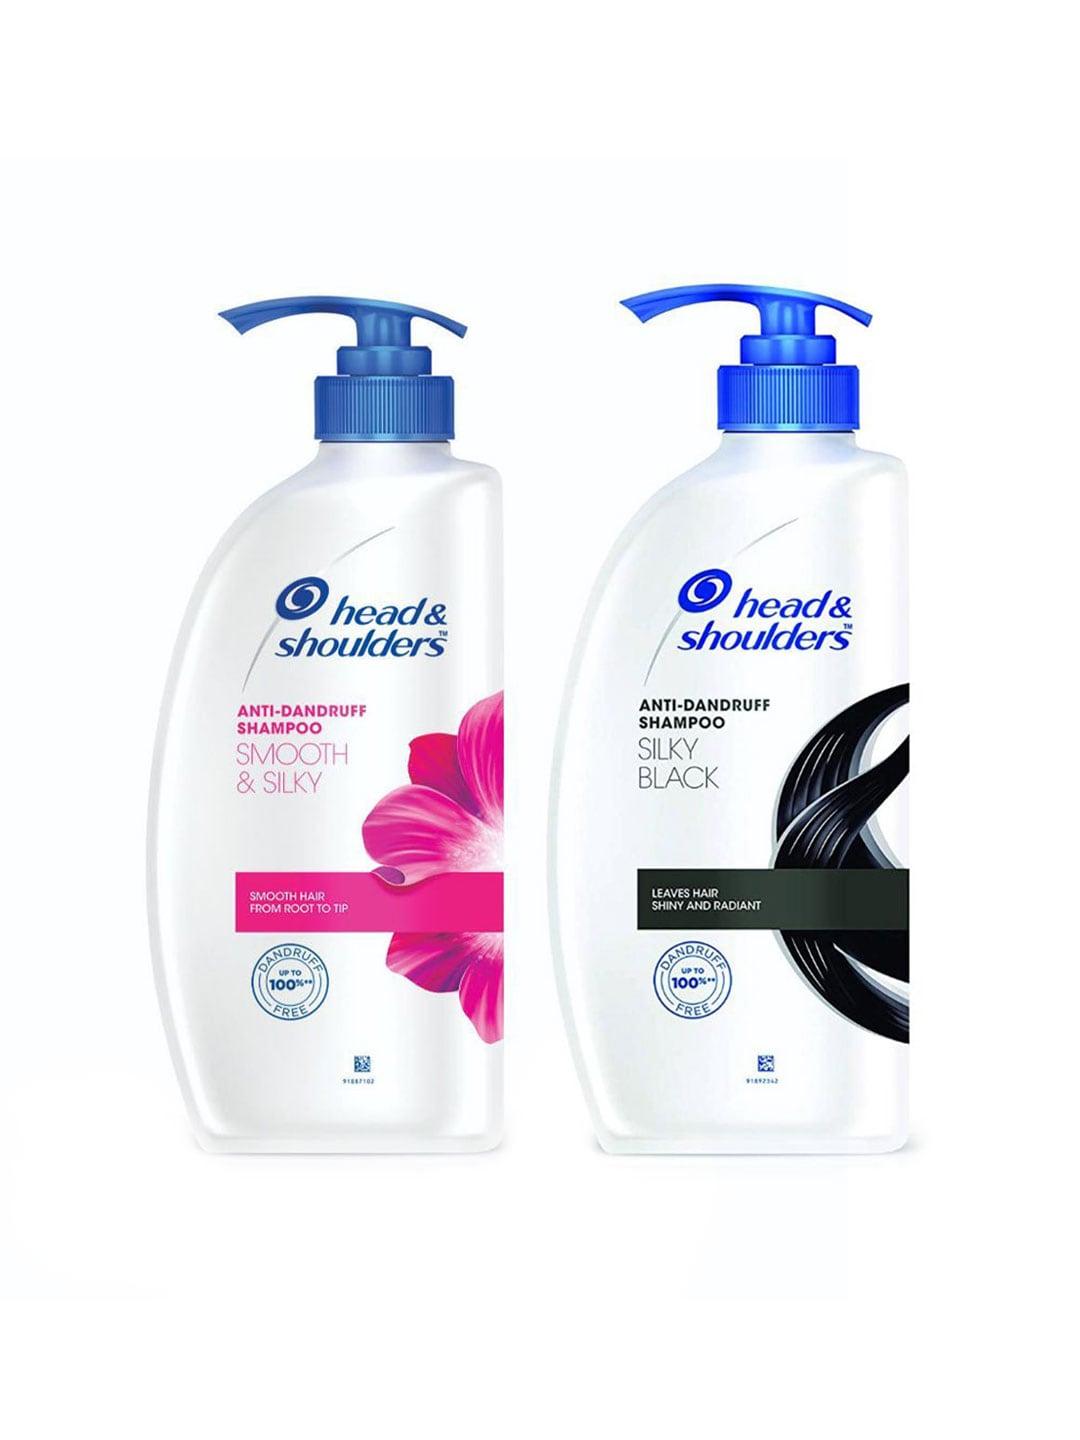 head-&-shoulders-set-of-2-anti-dandruff-shampoo--silky-black-&-smooth-&-silky--650-ml-each